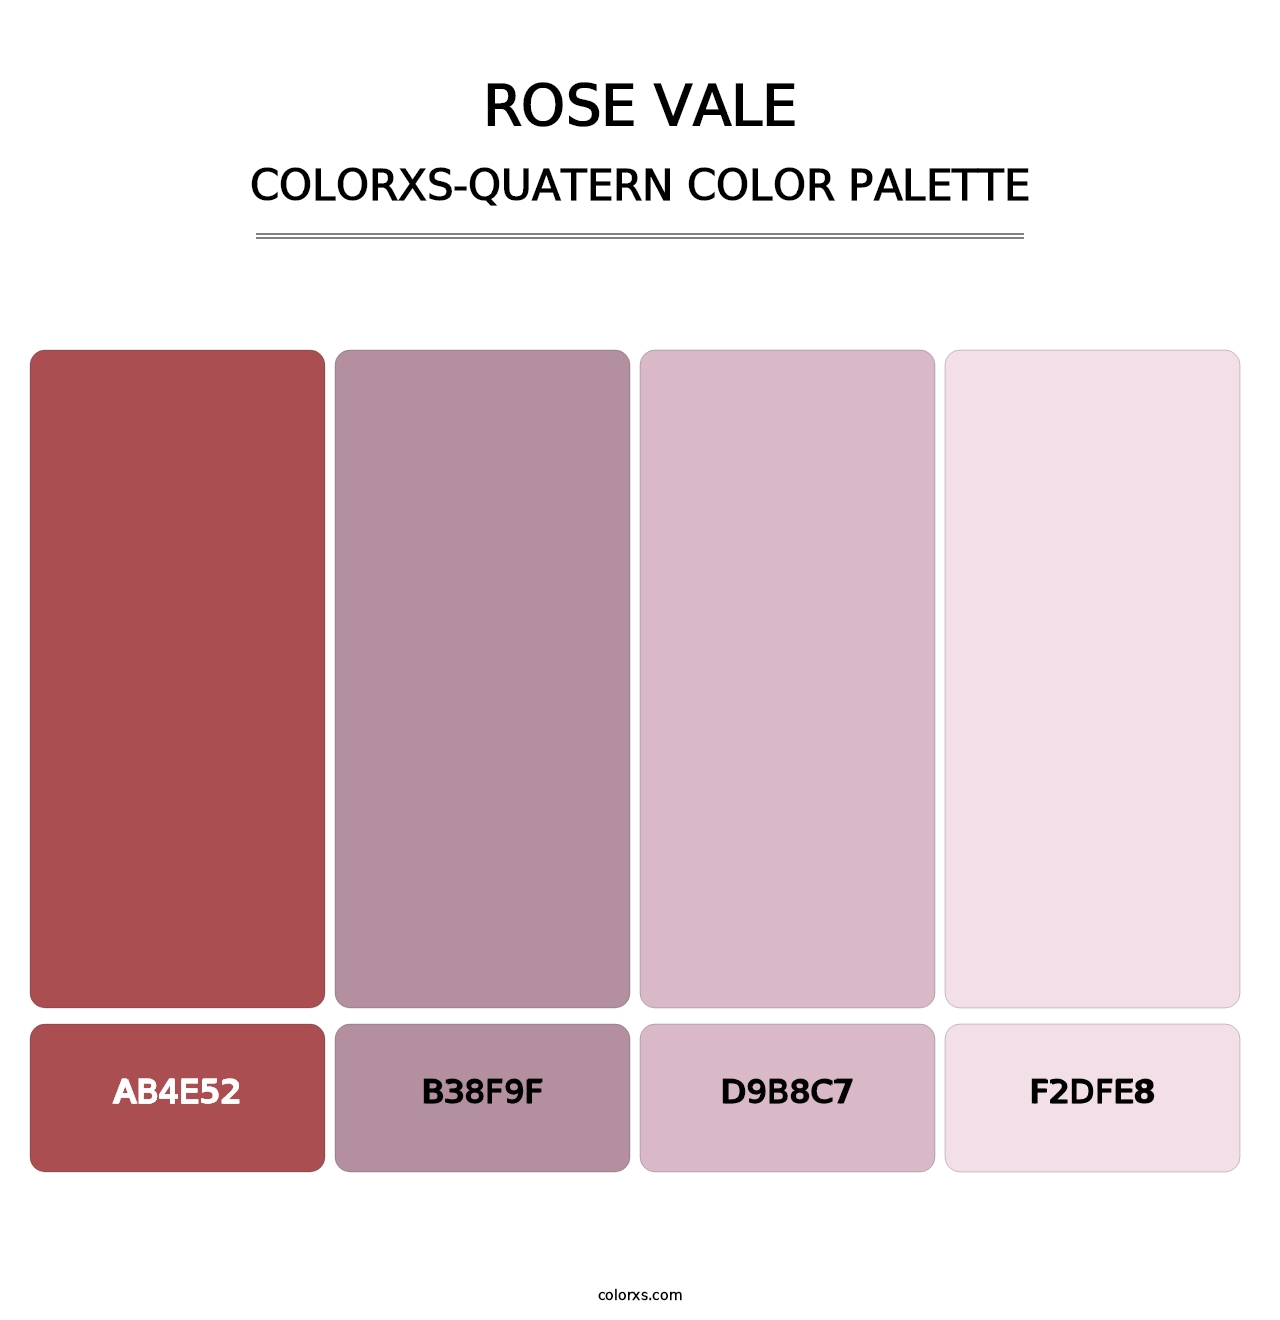 Rose Vale - Colorxs Quatern Palette